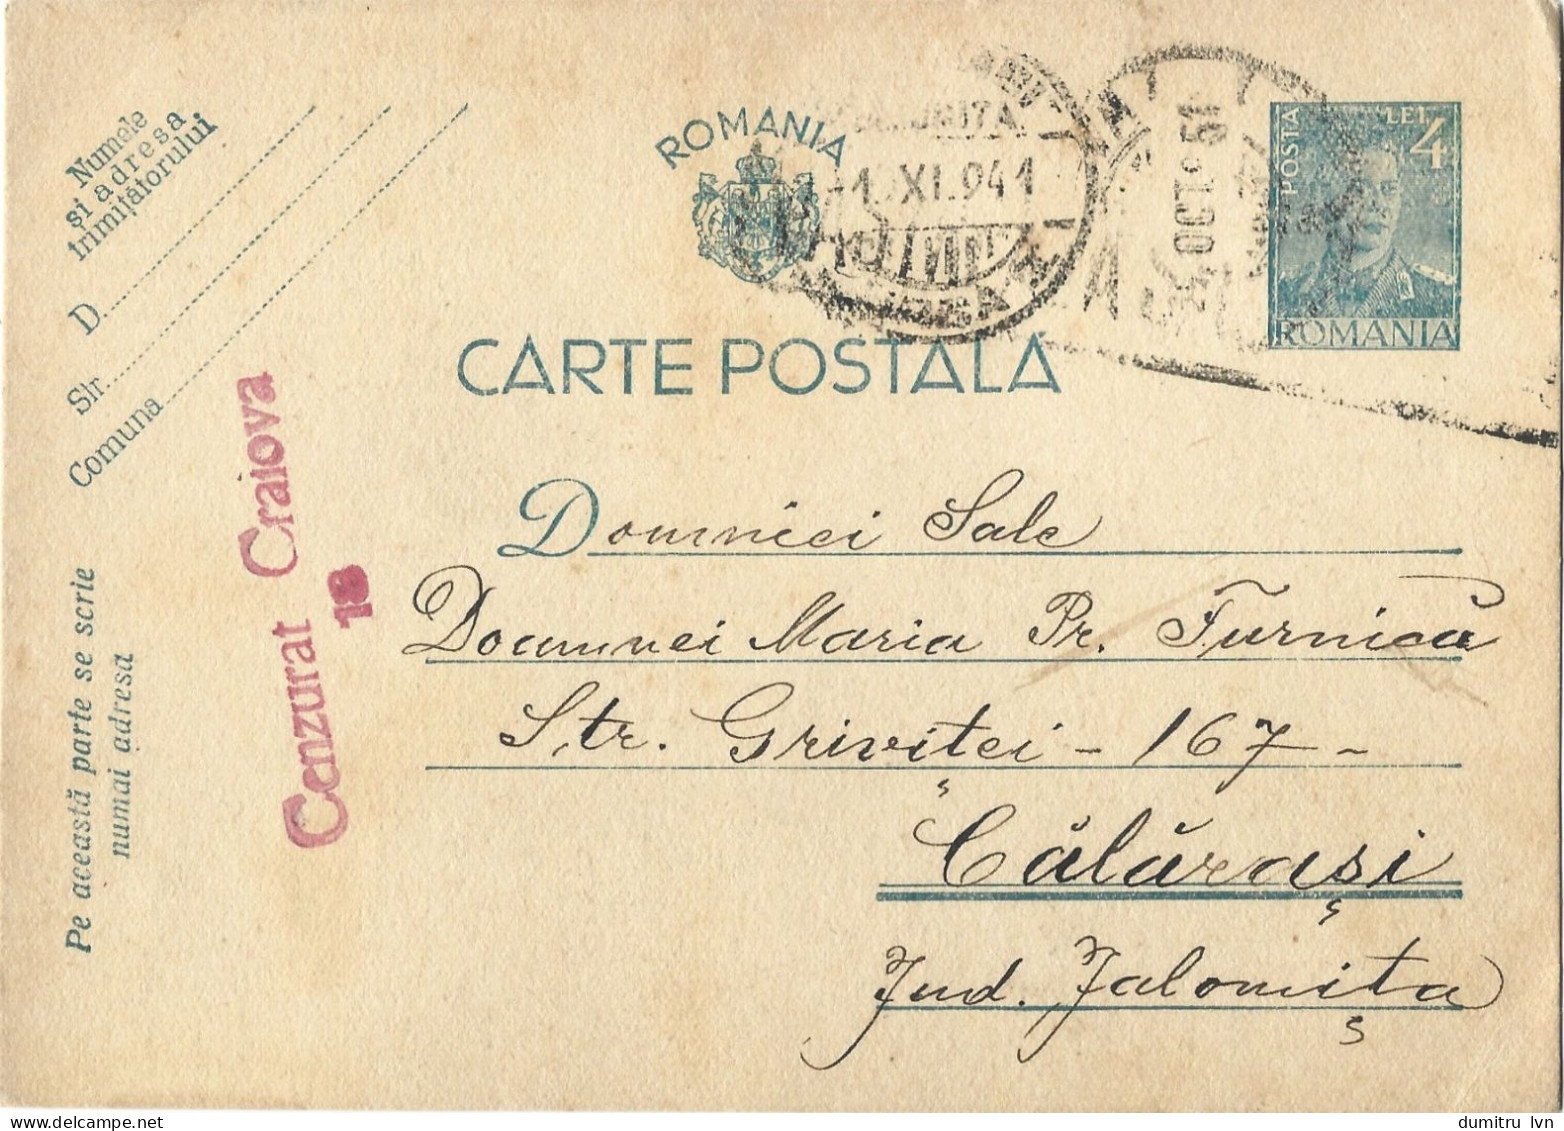 ROMANIA 1941 POSTCARD, CENSORED CRAIOVA NO.18 POSTCARD STATIONERY - World War 2 Letters